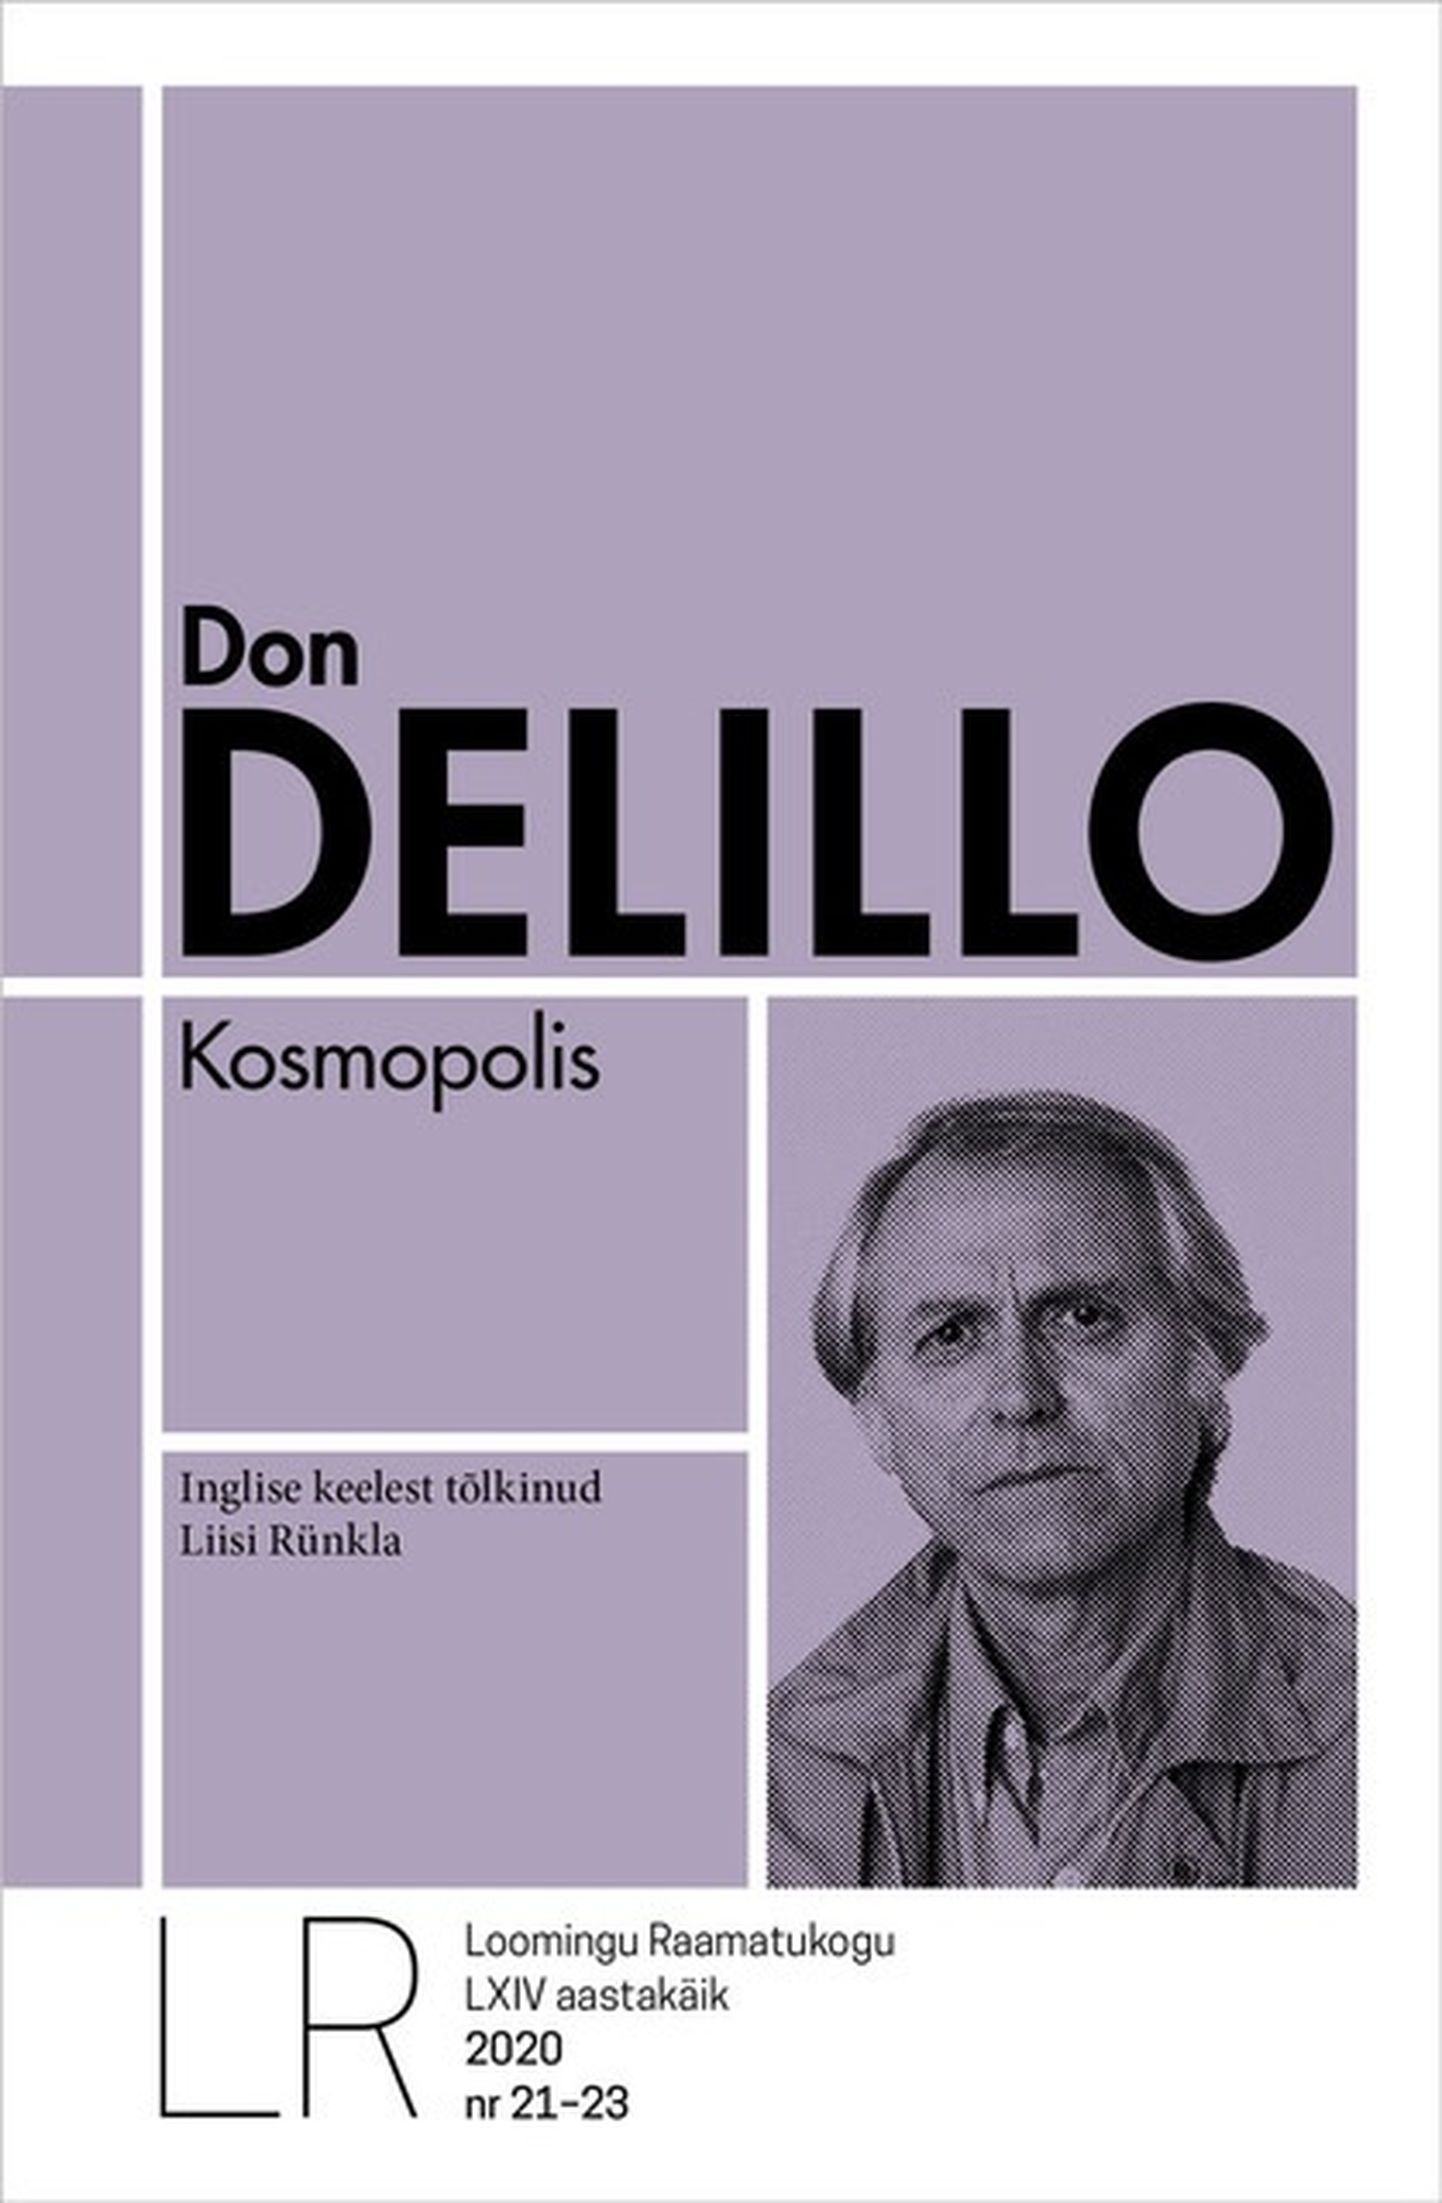 Don DeLillo "Kosmopolis".